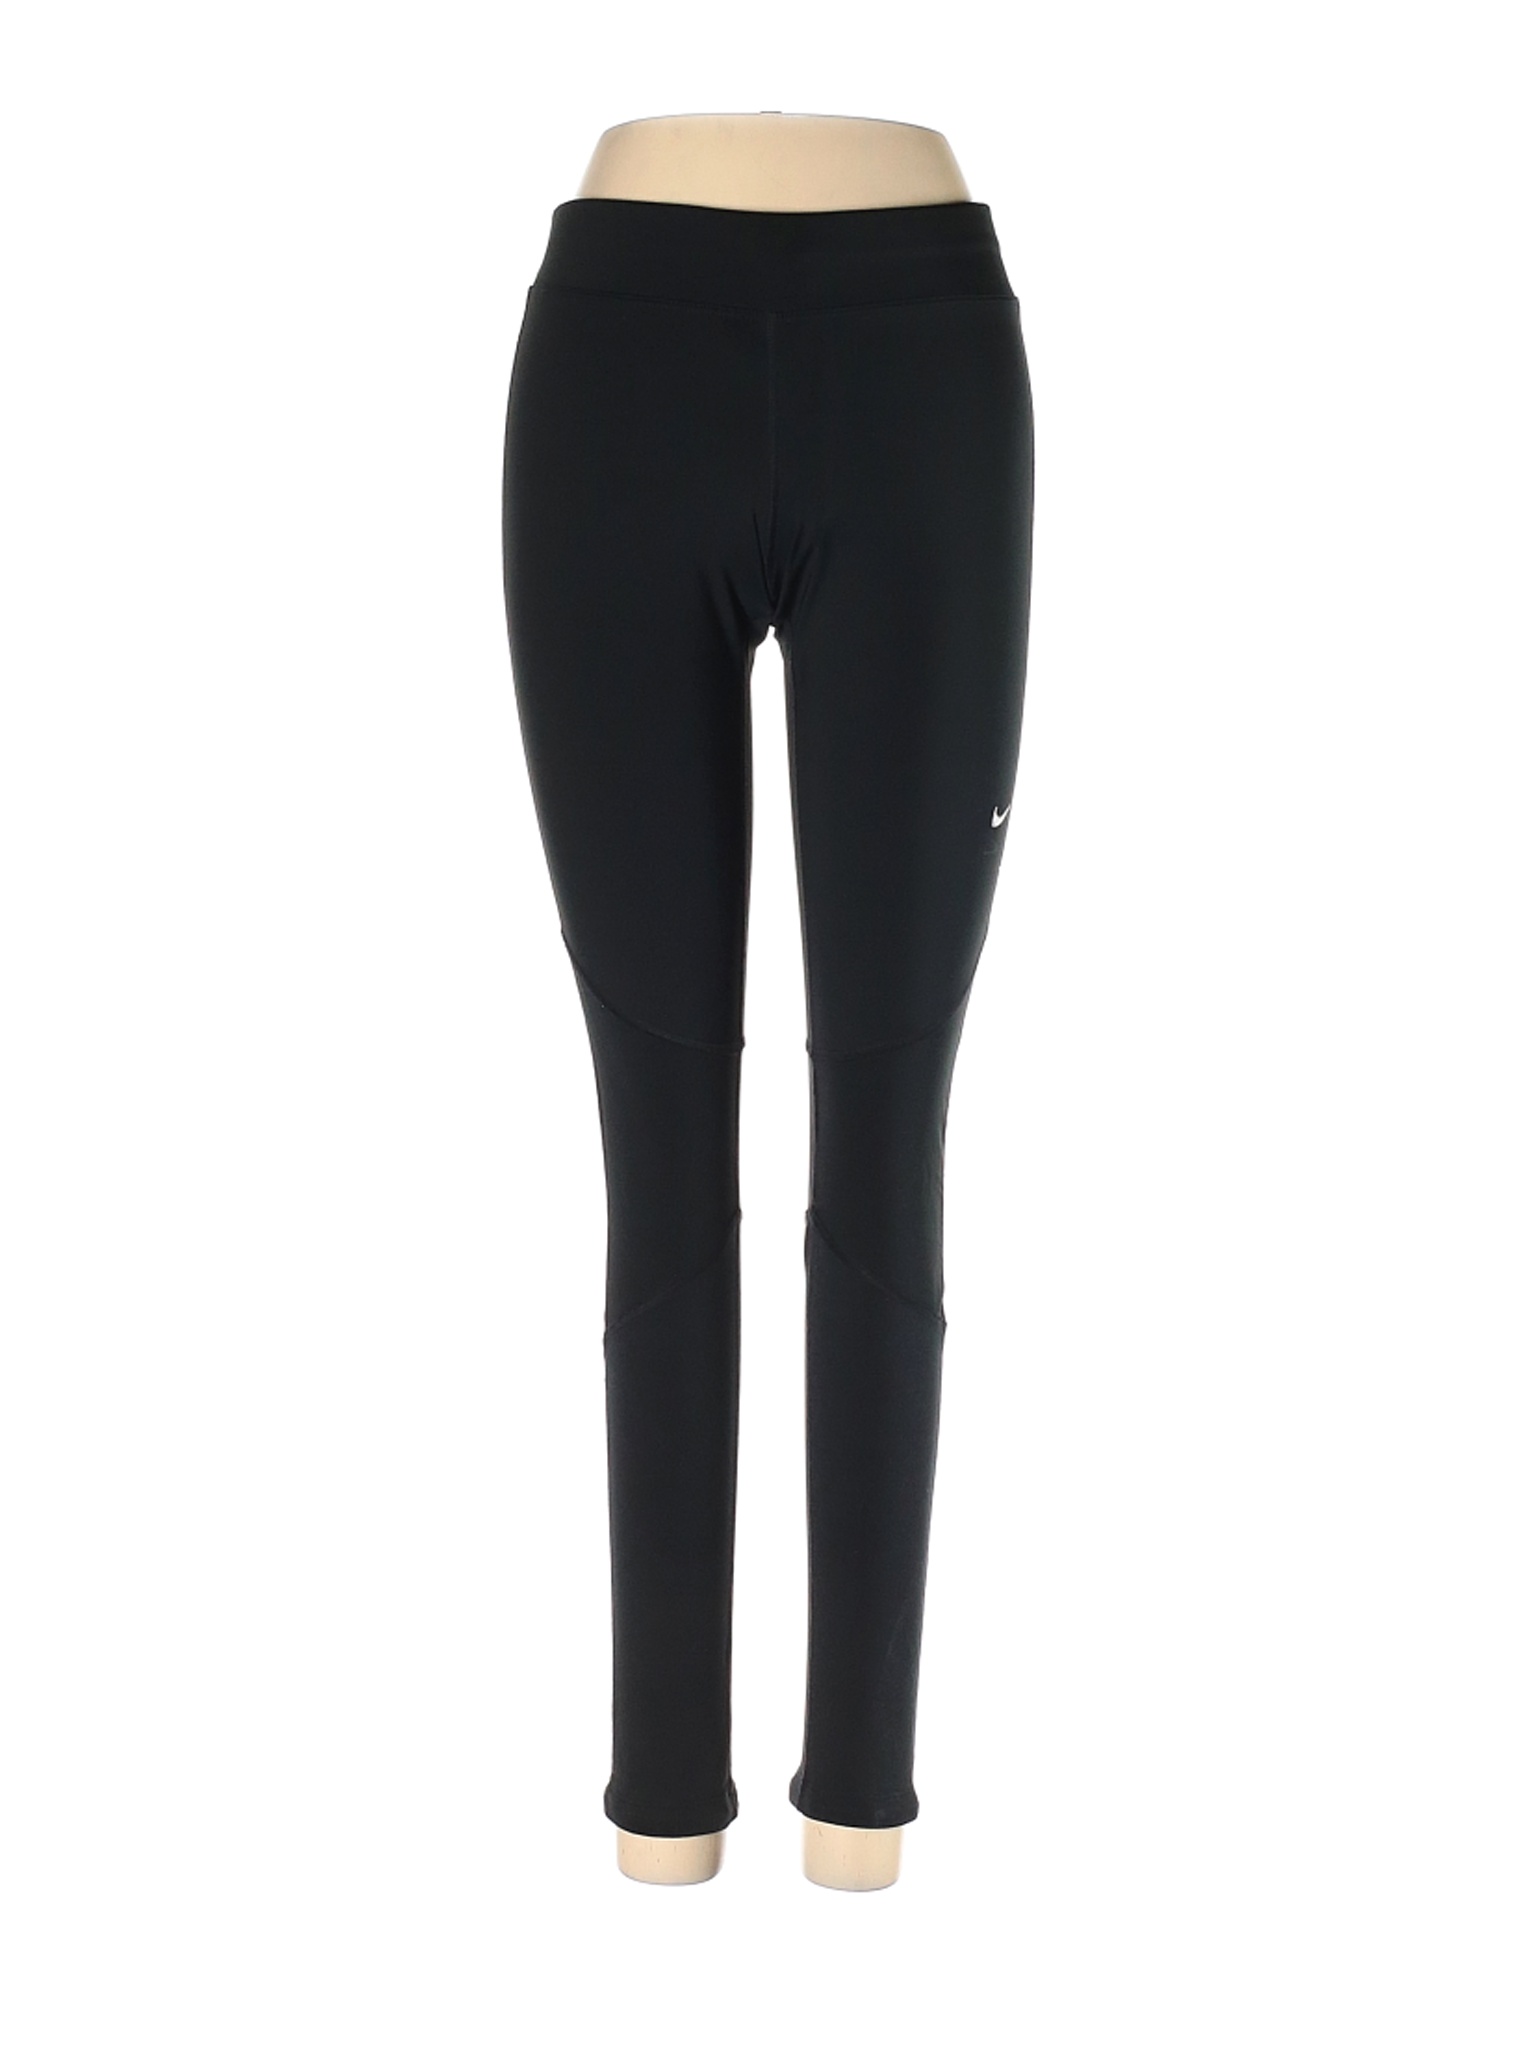 Nike Women Black Active Pants S | eBay